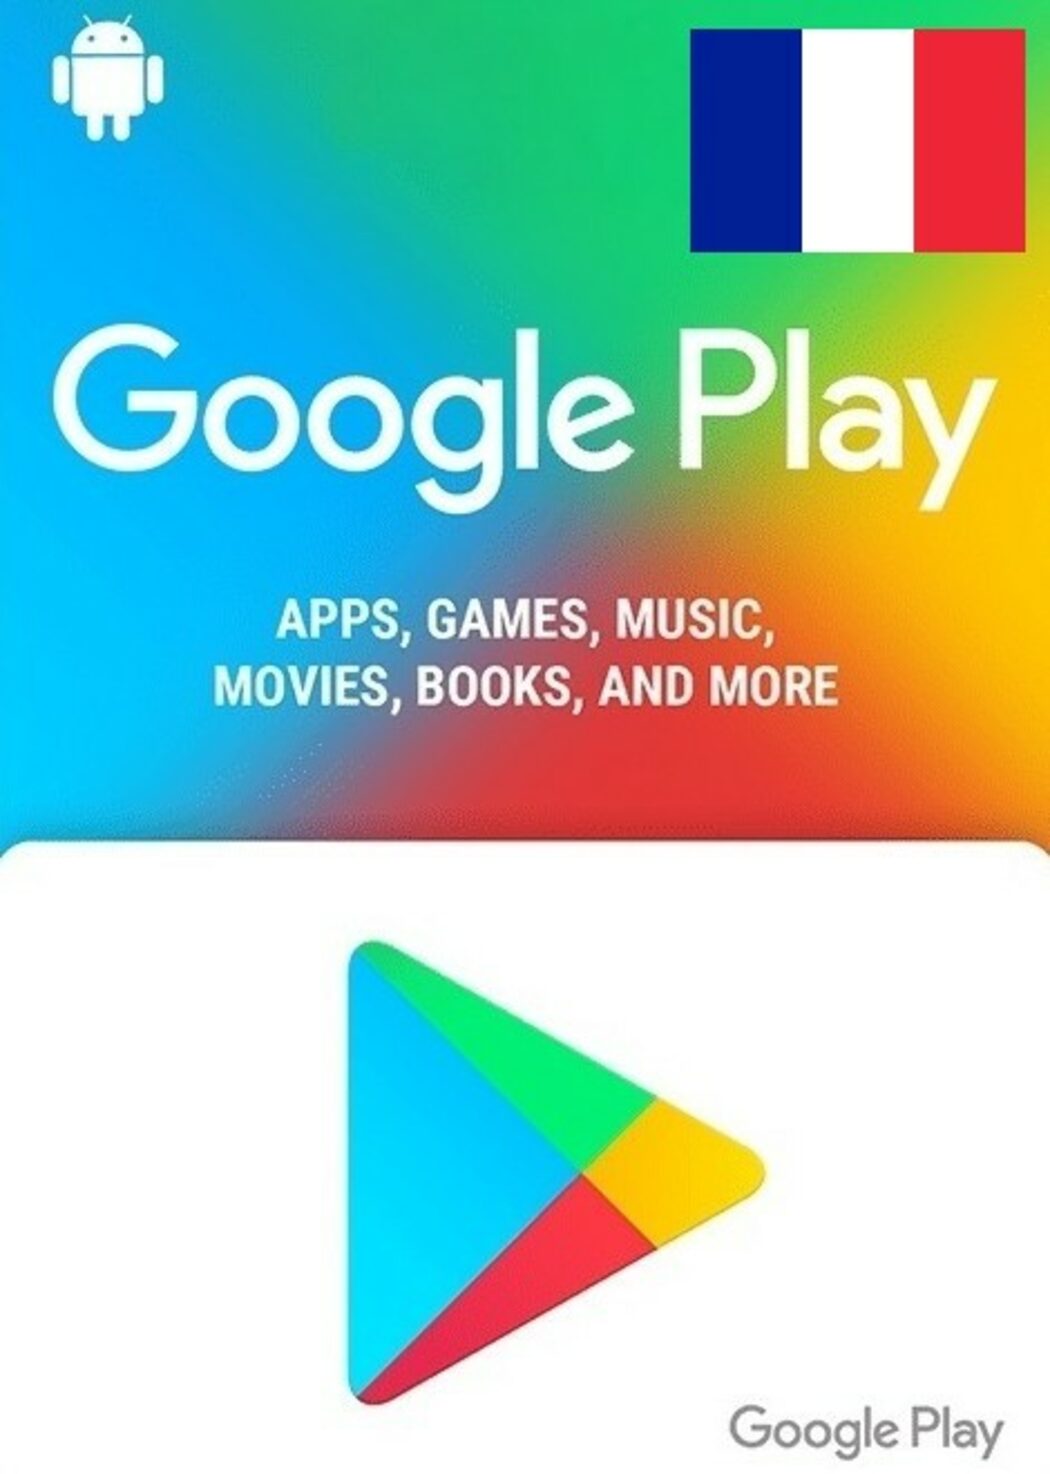 Smartphone France Android Edition : Les cartes cadeaux Google Play  disponibles  aux USA